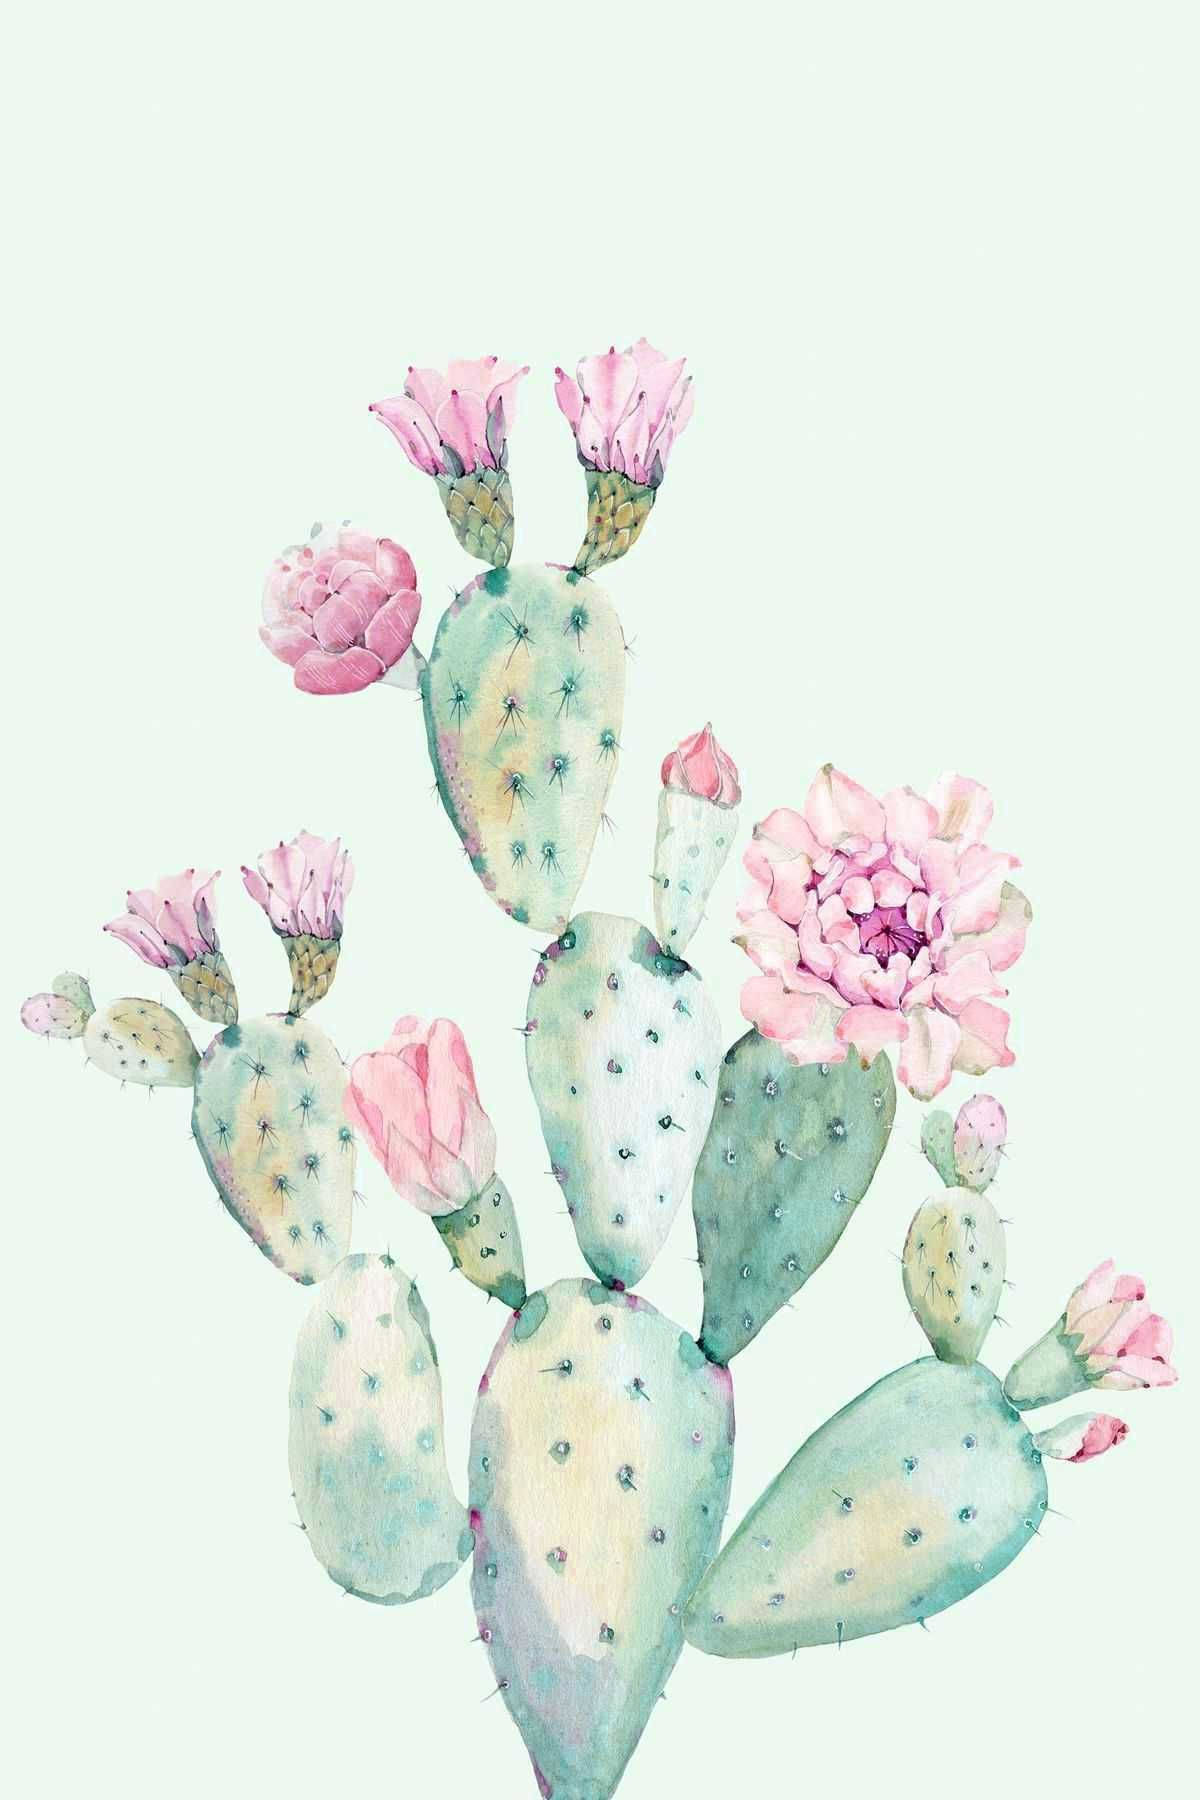 Pastel Cactus Flower Mobile Wallpaper